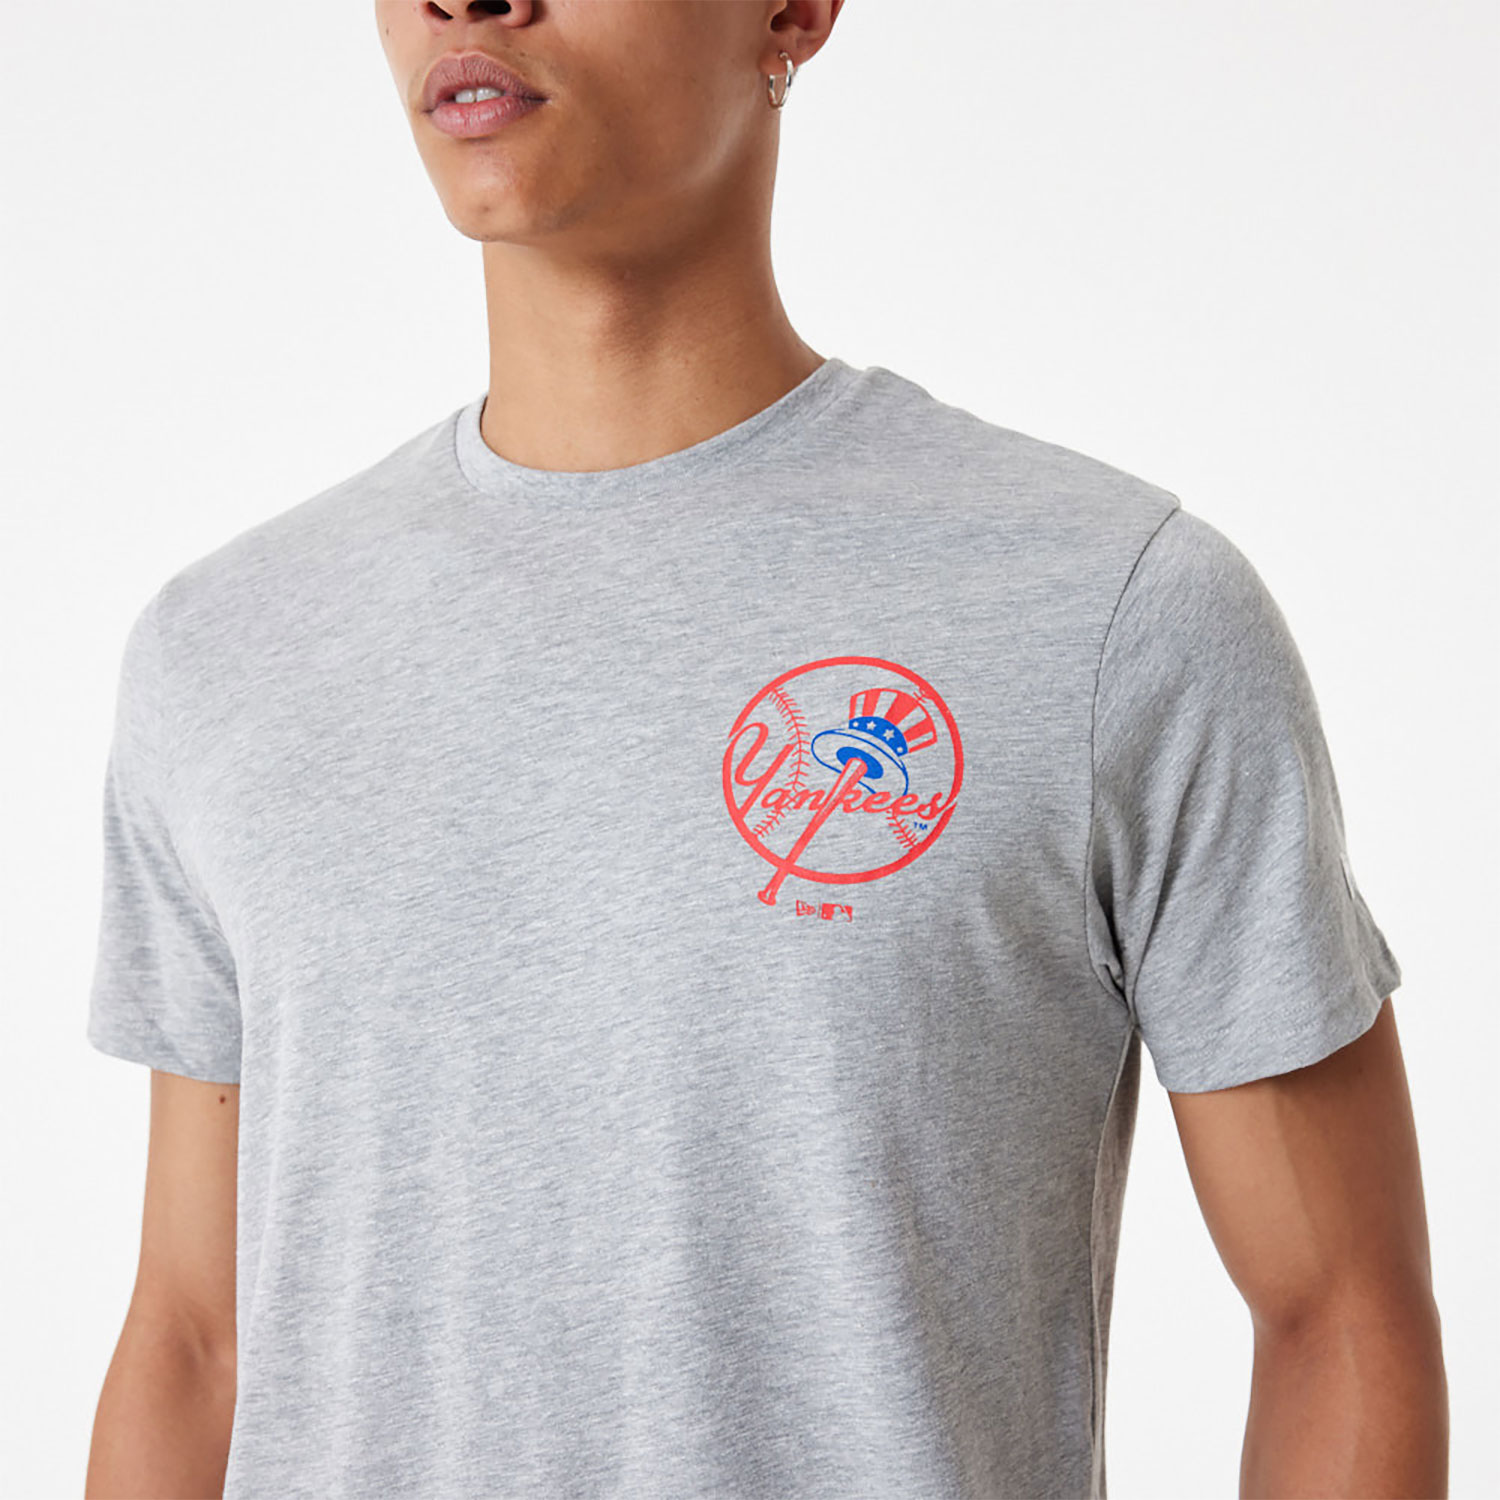 New York Yankees MLB Team Graphic Grey T-Shirt